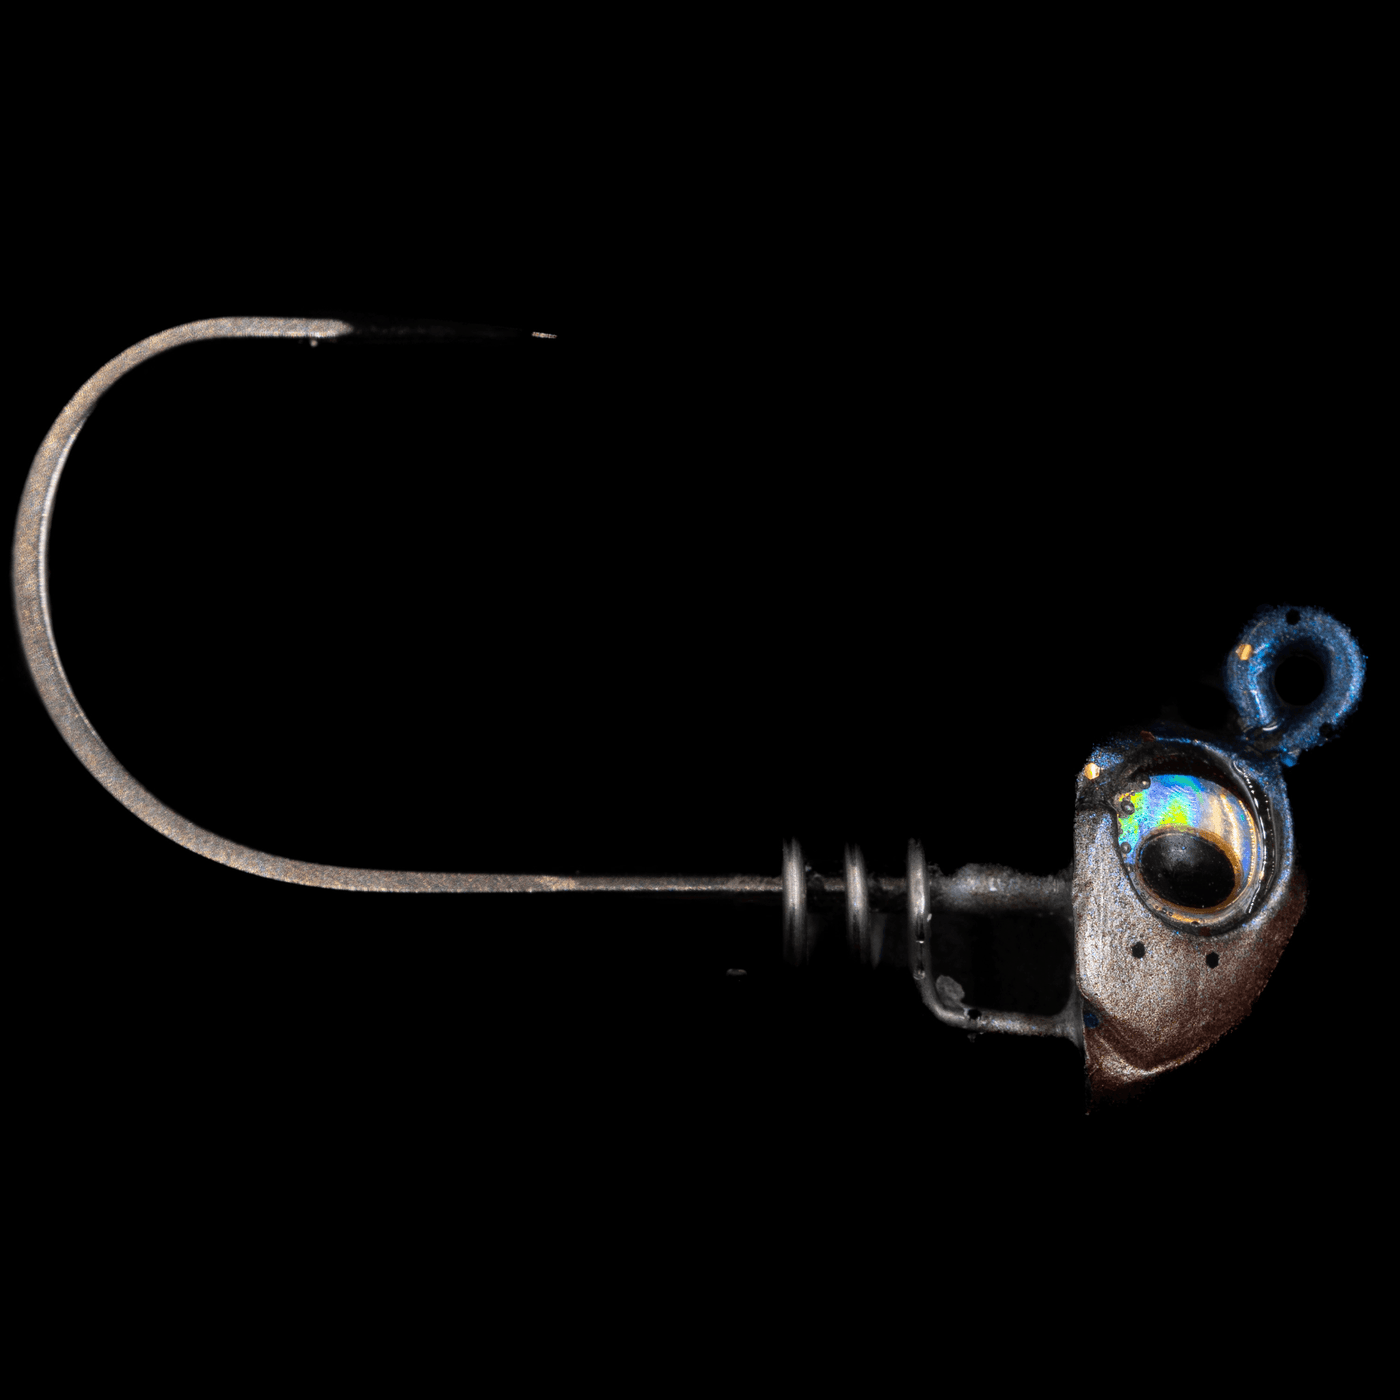 Premium fishing Jig Heads for 3 bait - No Live Bait Needed $5.99